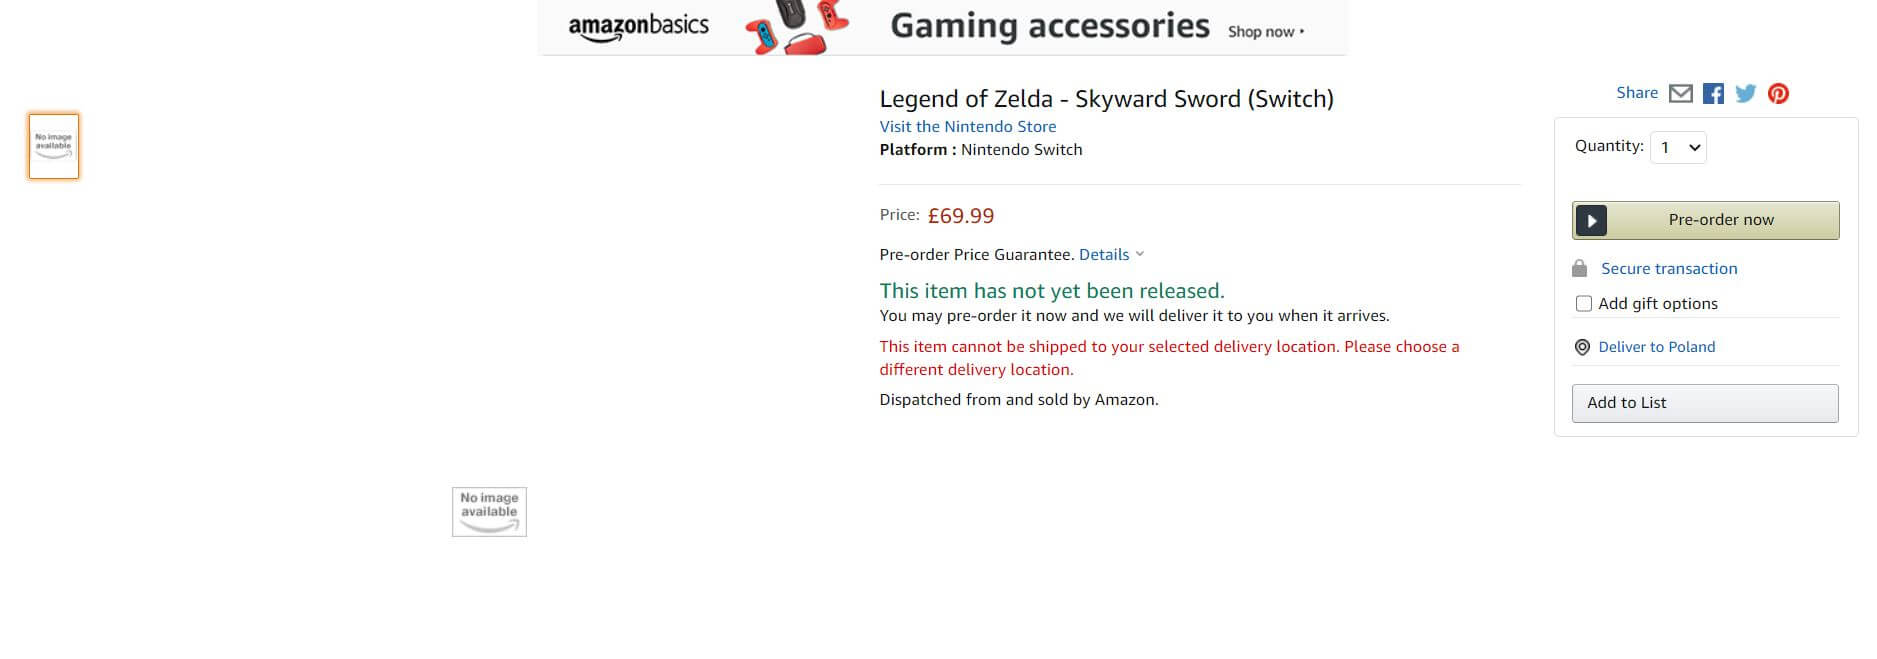 Legend of Zelda Skyward Sword Nintendo Switch Amazon